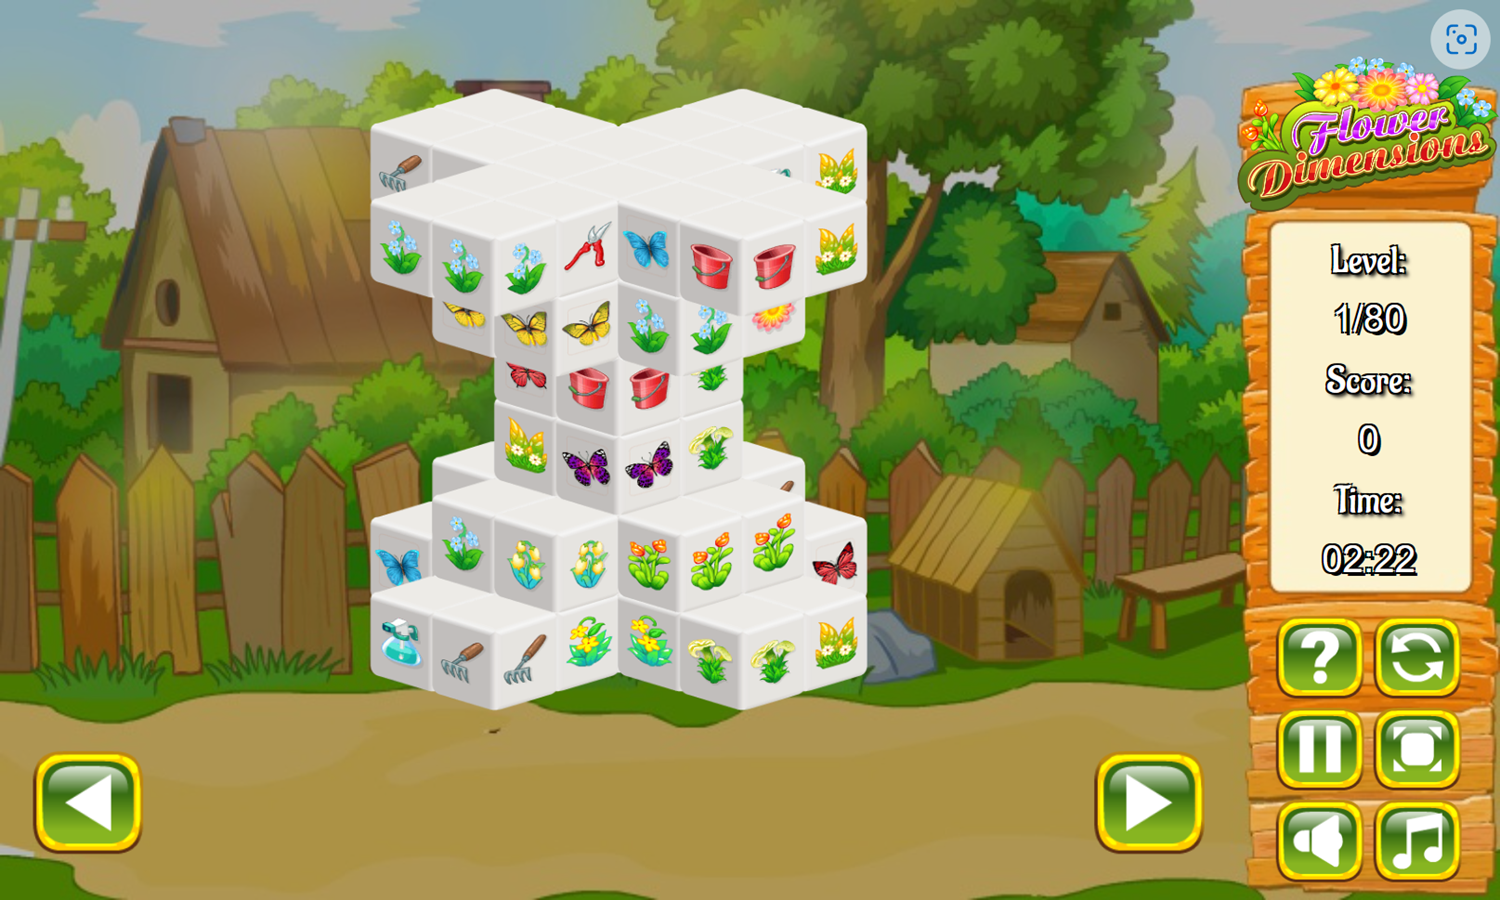 Flower Dimensions Game Level Start Screenshot.